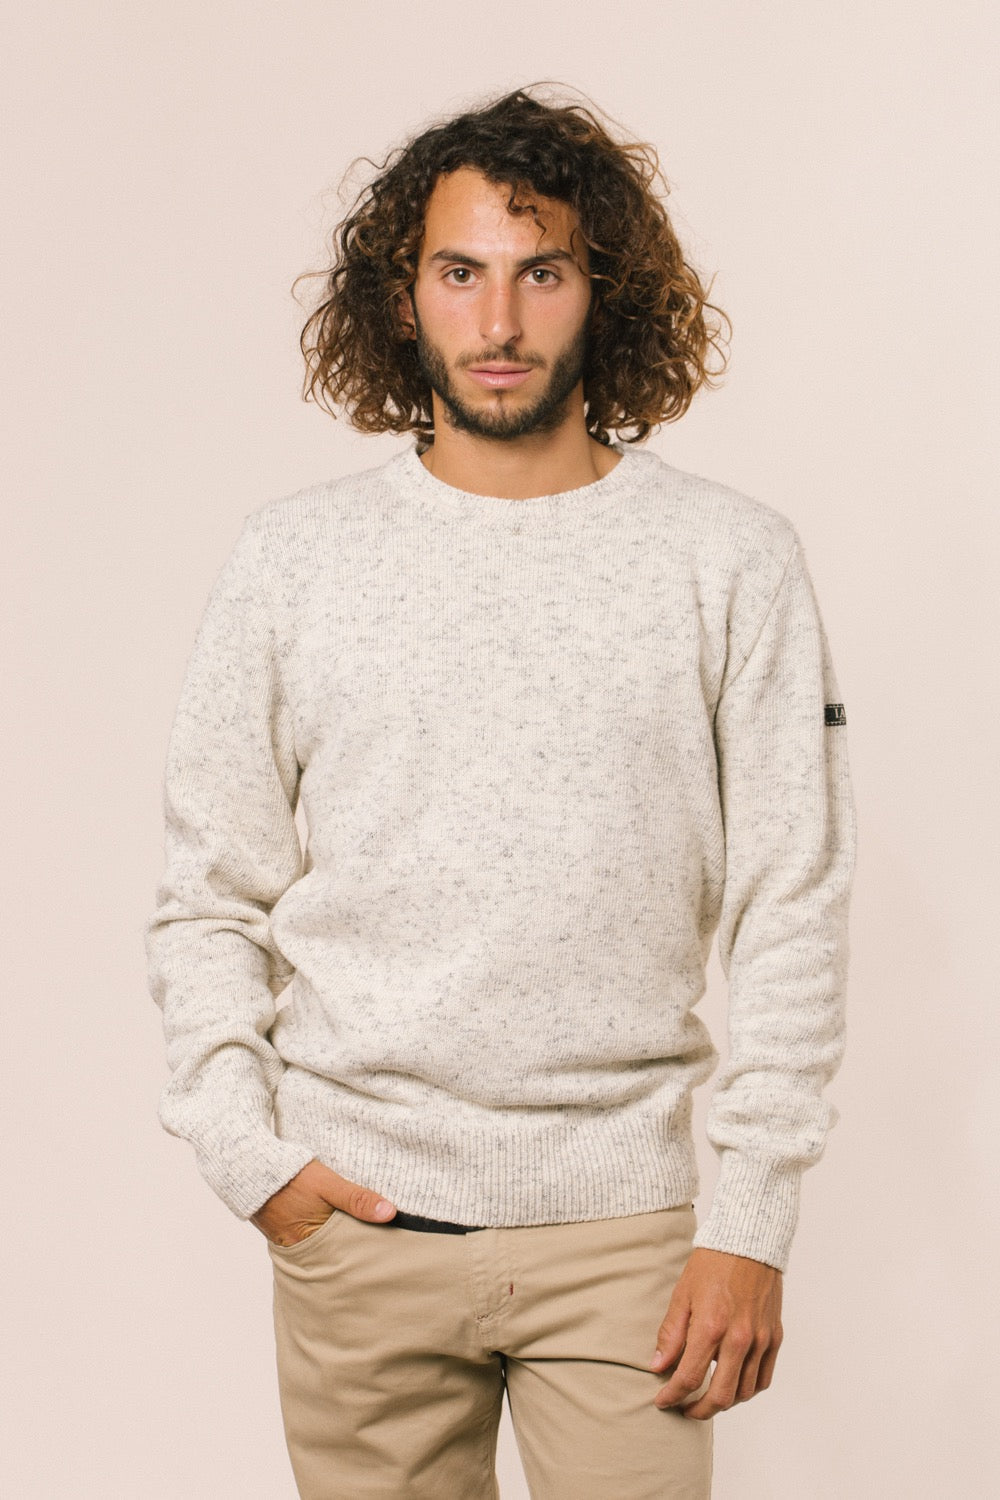 Kapuściński sweater